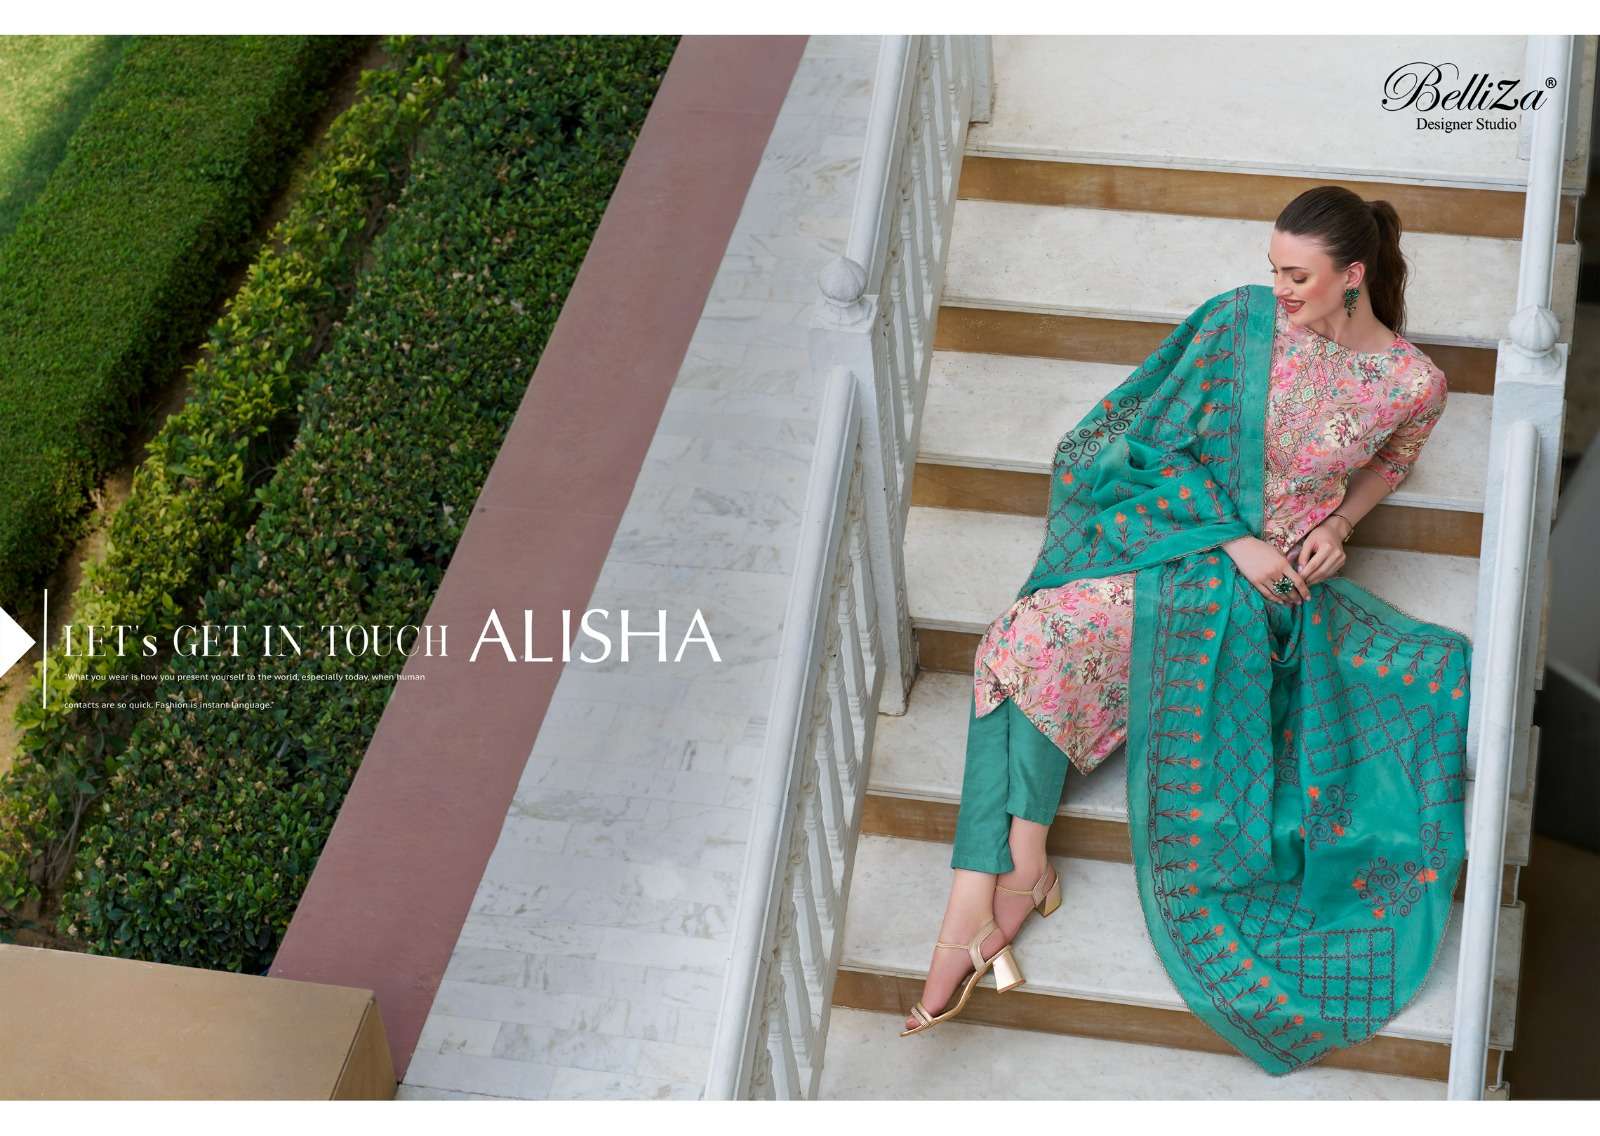 belliza designer studio alisha cotton catchy look salwar suit catalog